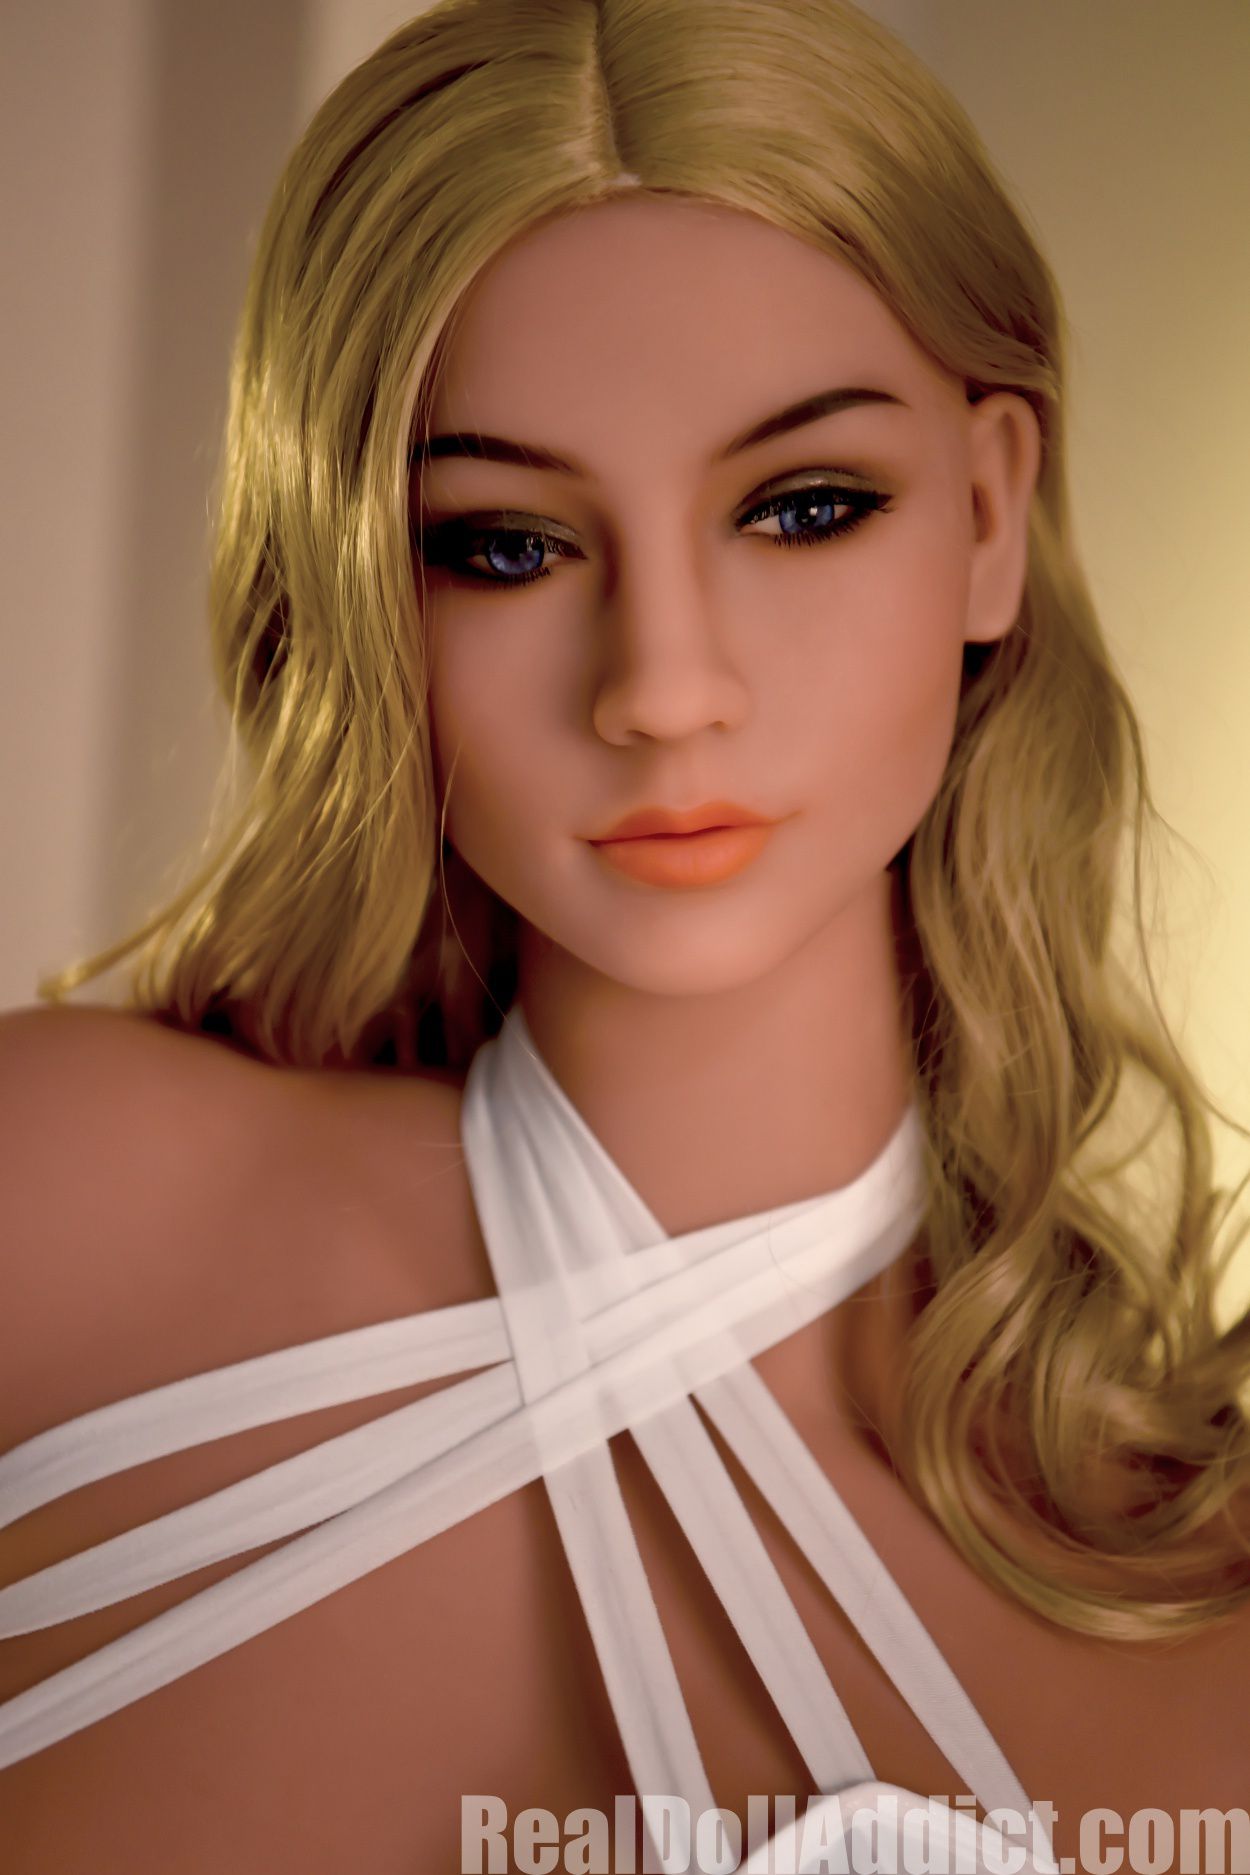 Fatal Beauty _ Real Doll Addict, Sex Doll Blog 15